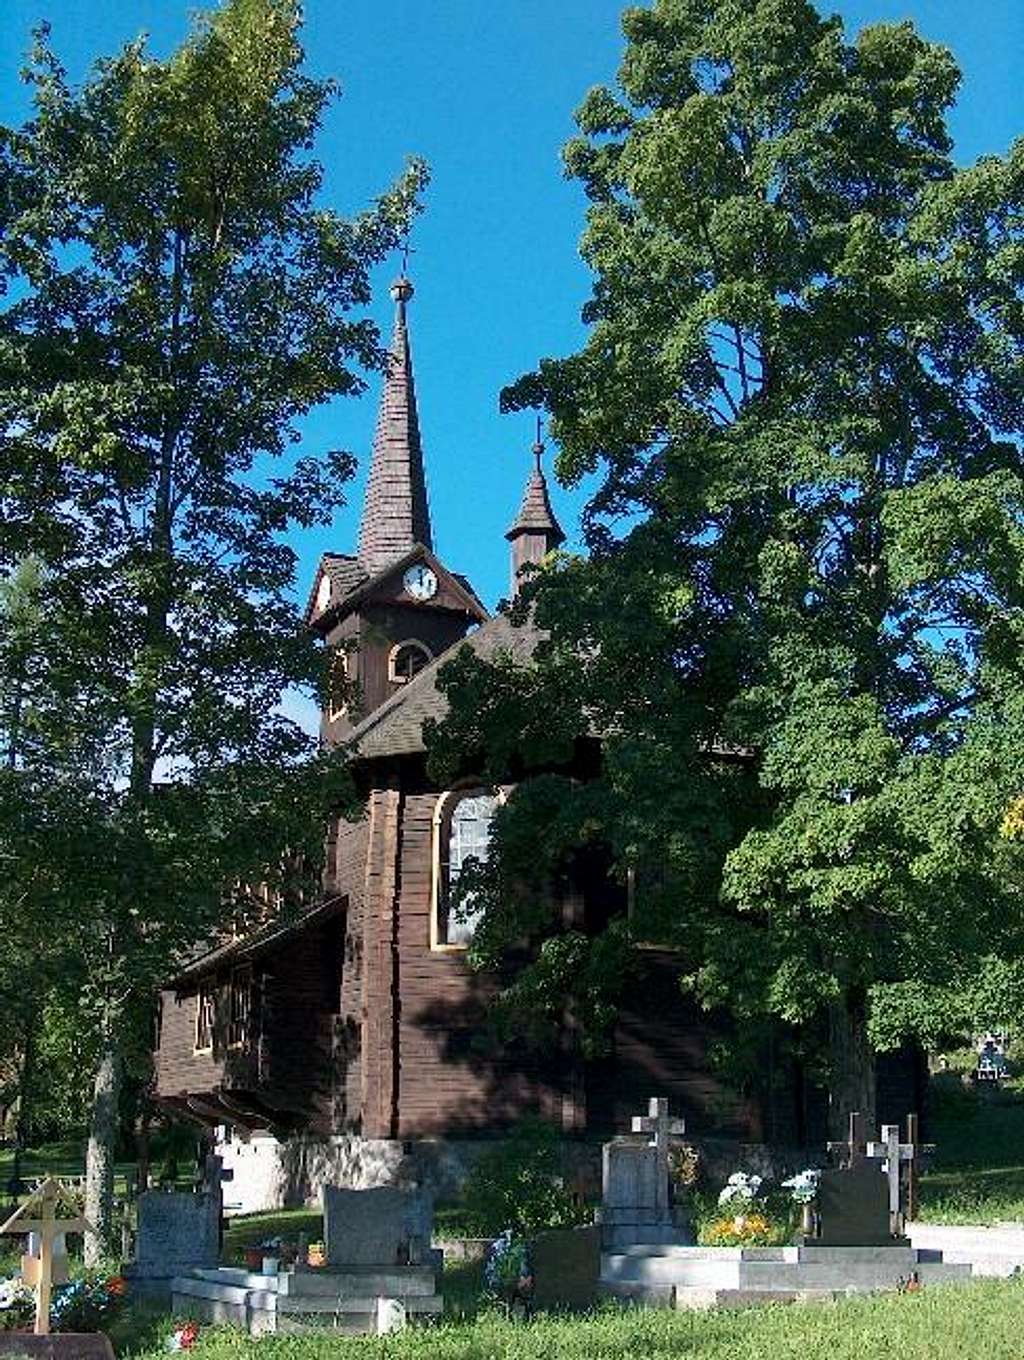 The wooden church in Javorina